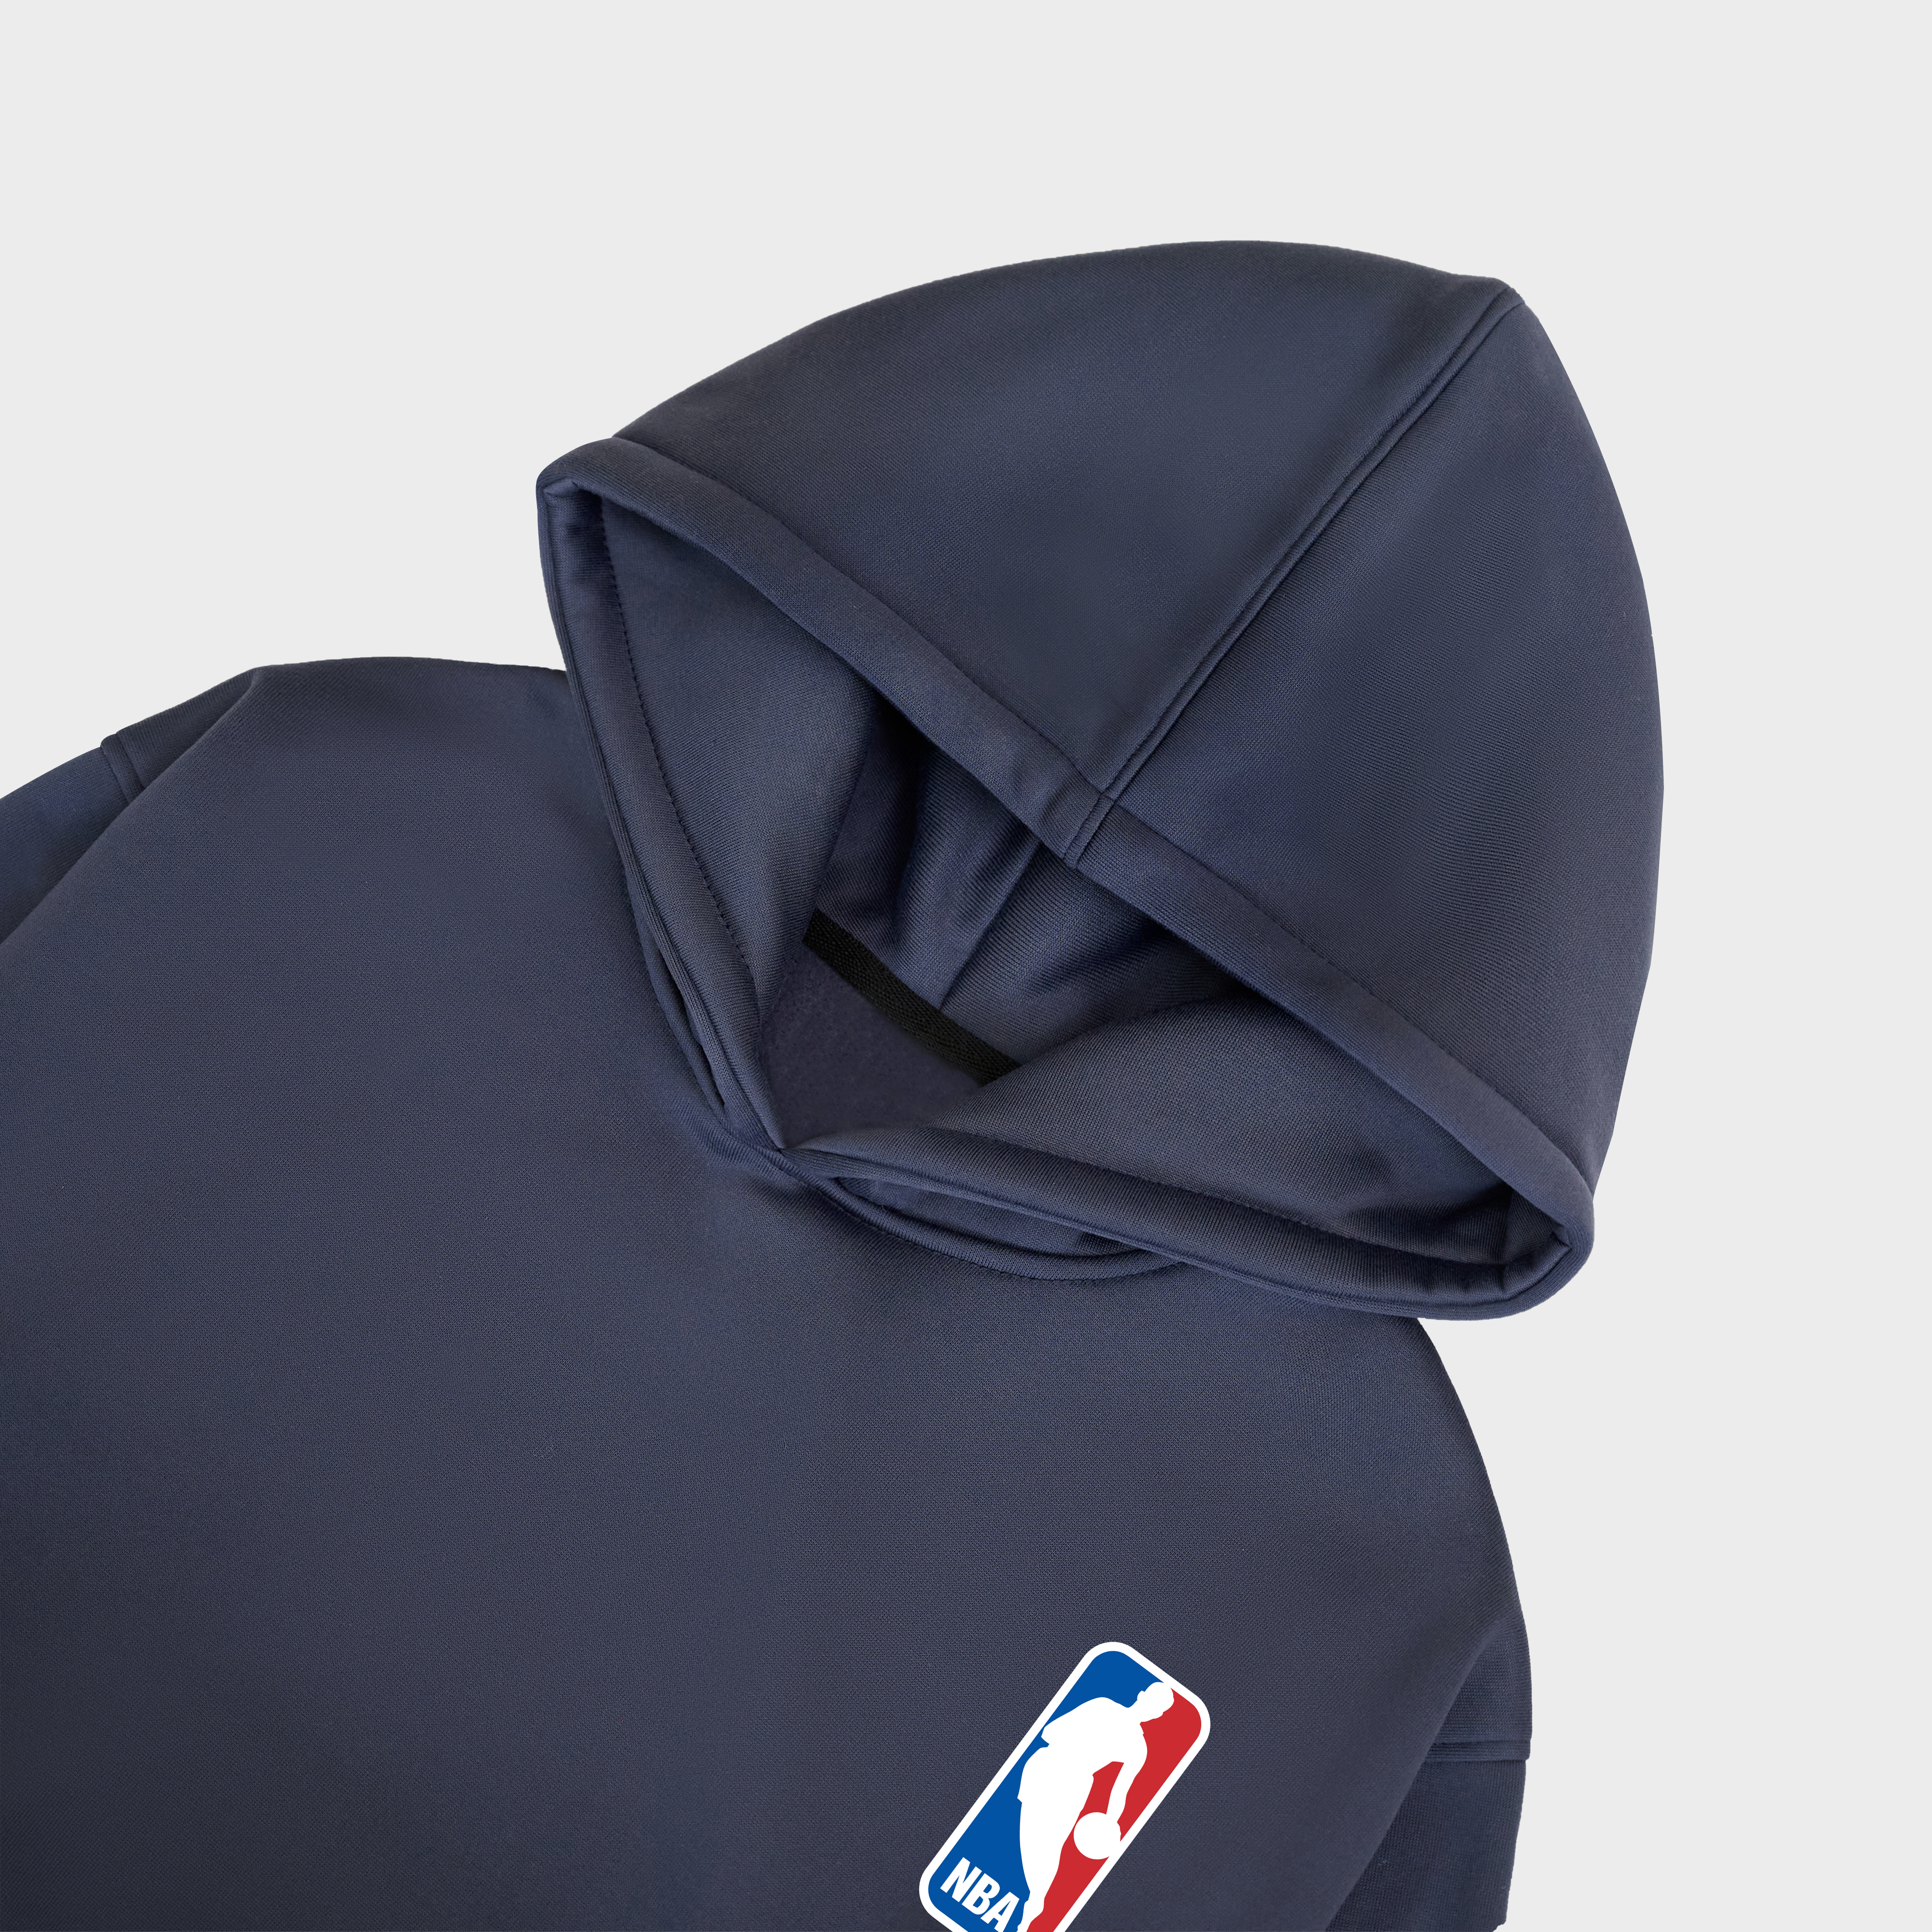 NBA Basketball Logo Hoodie